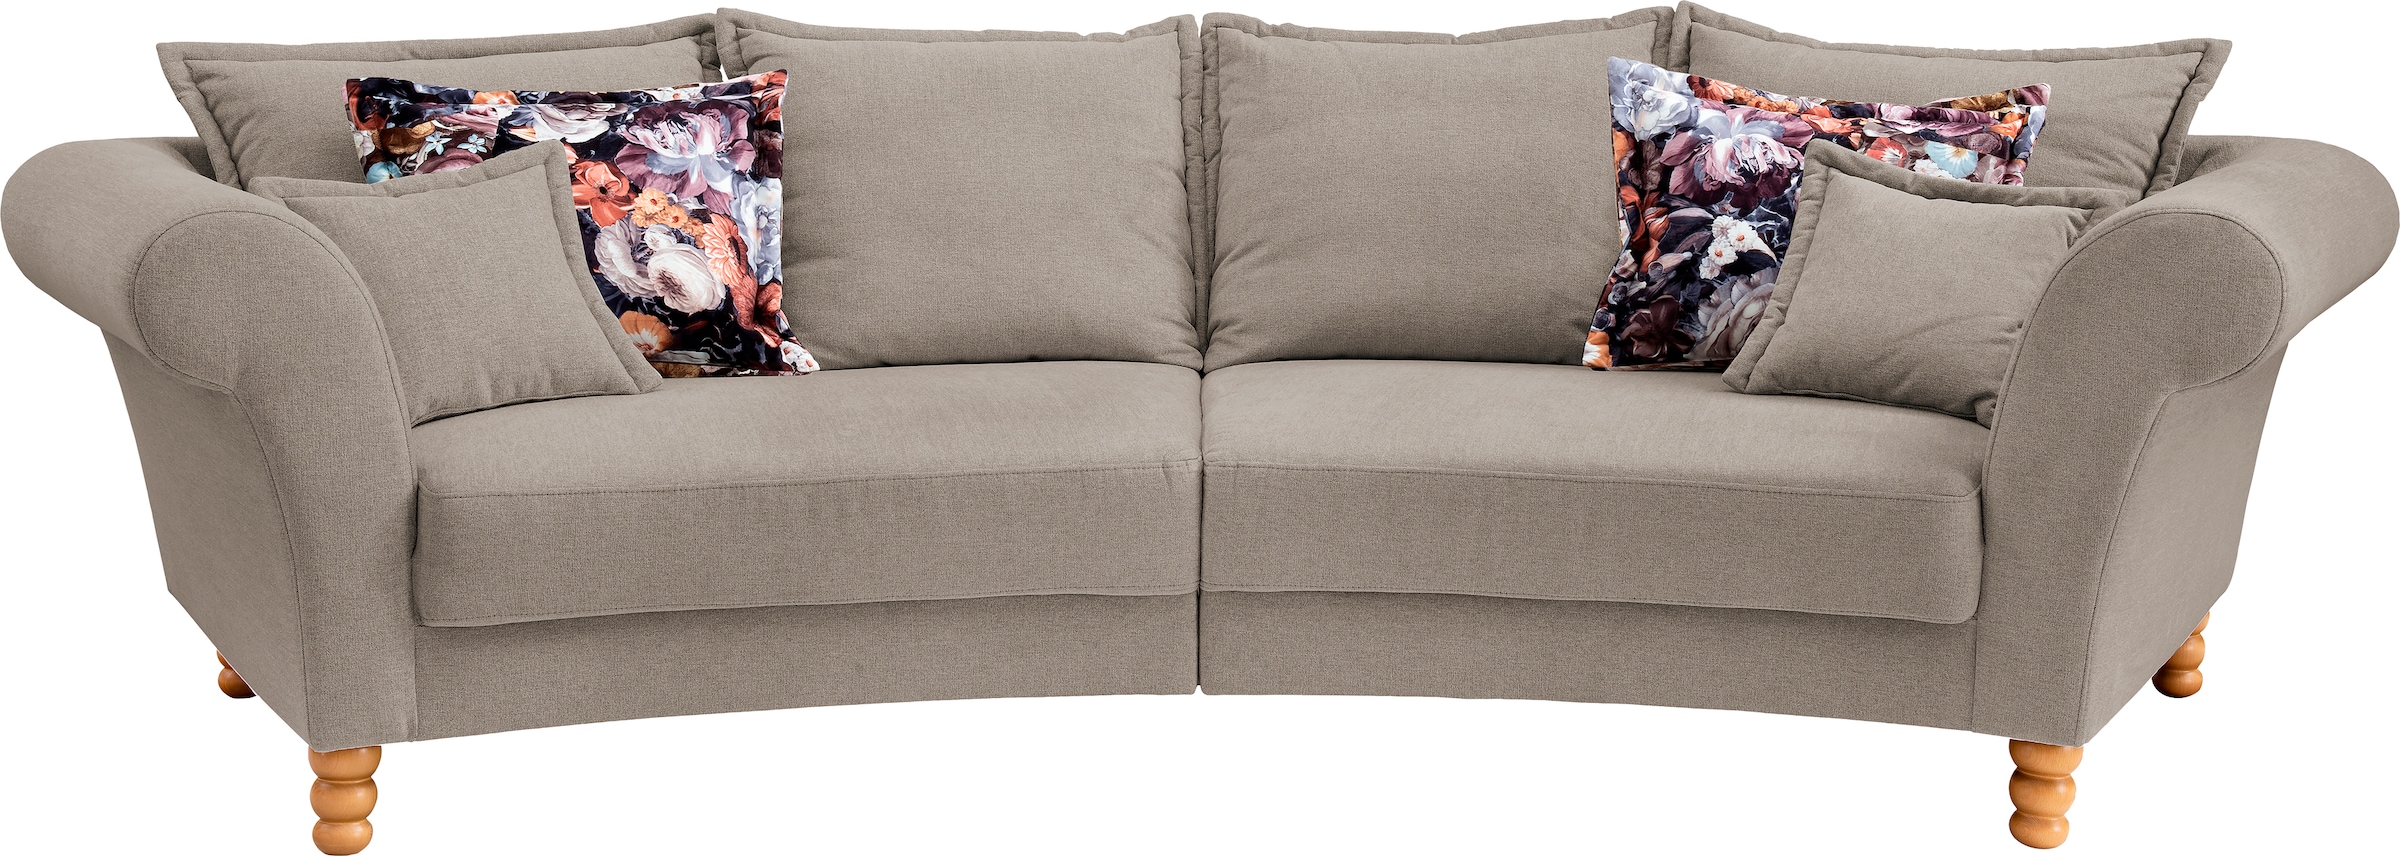 Home affaire Big-Sofa »Tassilo« kaufen | UNIVERSAL